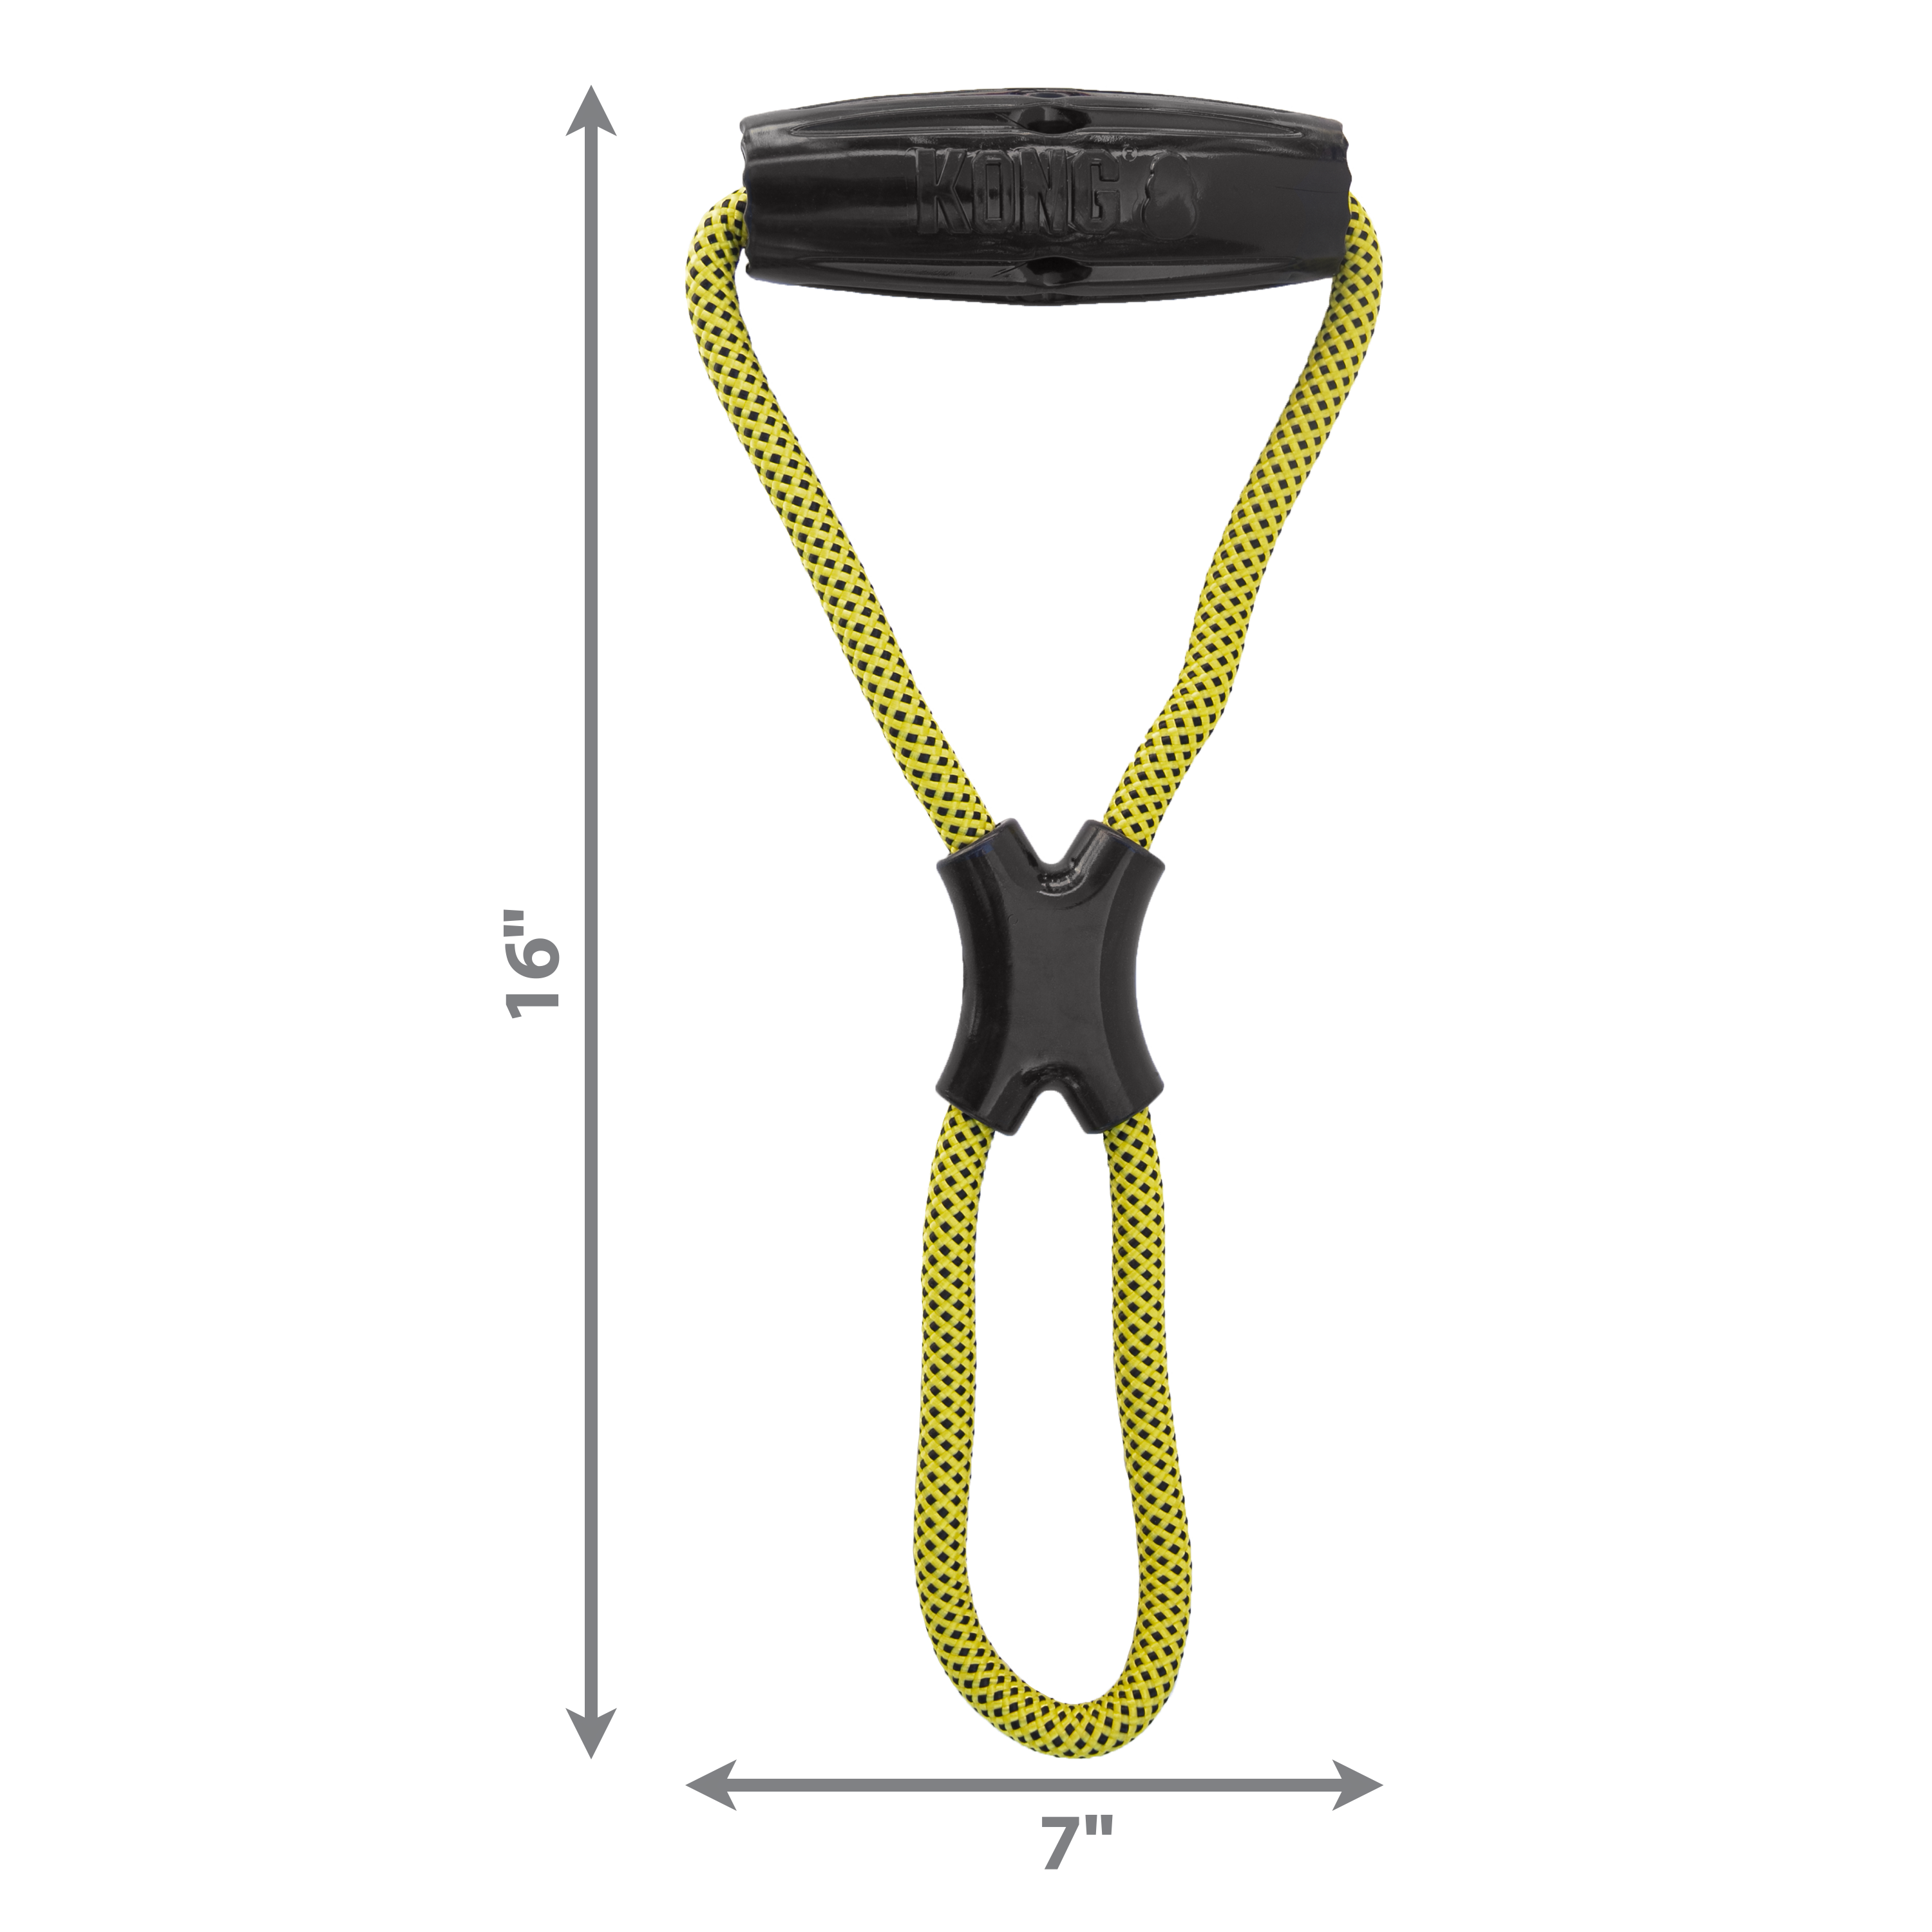 Jaxx Infinity Tug dimoffpack product image